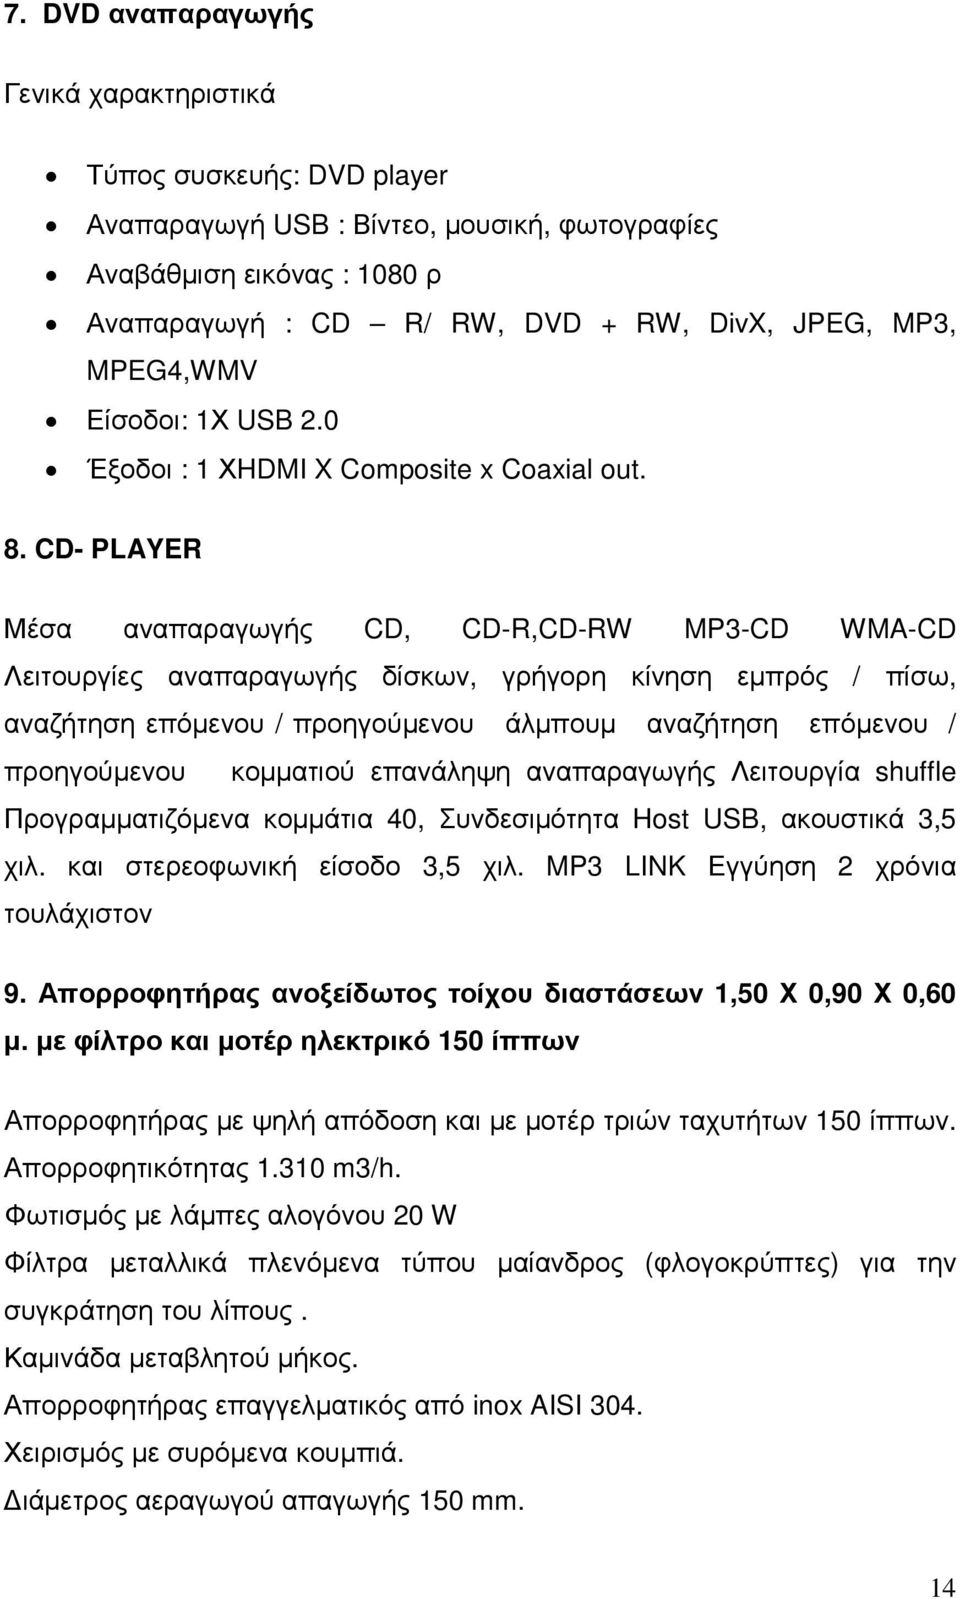 CD- PLAYER Μέσα αναπαραγωγής CD, CD-R,CD-RW MP3-CD WMA-CD Λειτουργίες αναπαραγωγής δίσκων, γρήγορη κίνηση εμπρός / πίσω, αναζήτηση επόμενου / προηγούμενου άλμπουμ αναζήτηση επόμενου / προηγούμενου